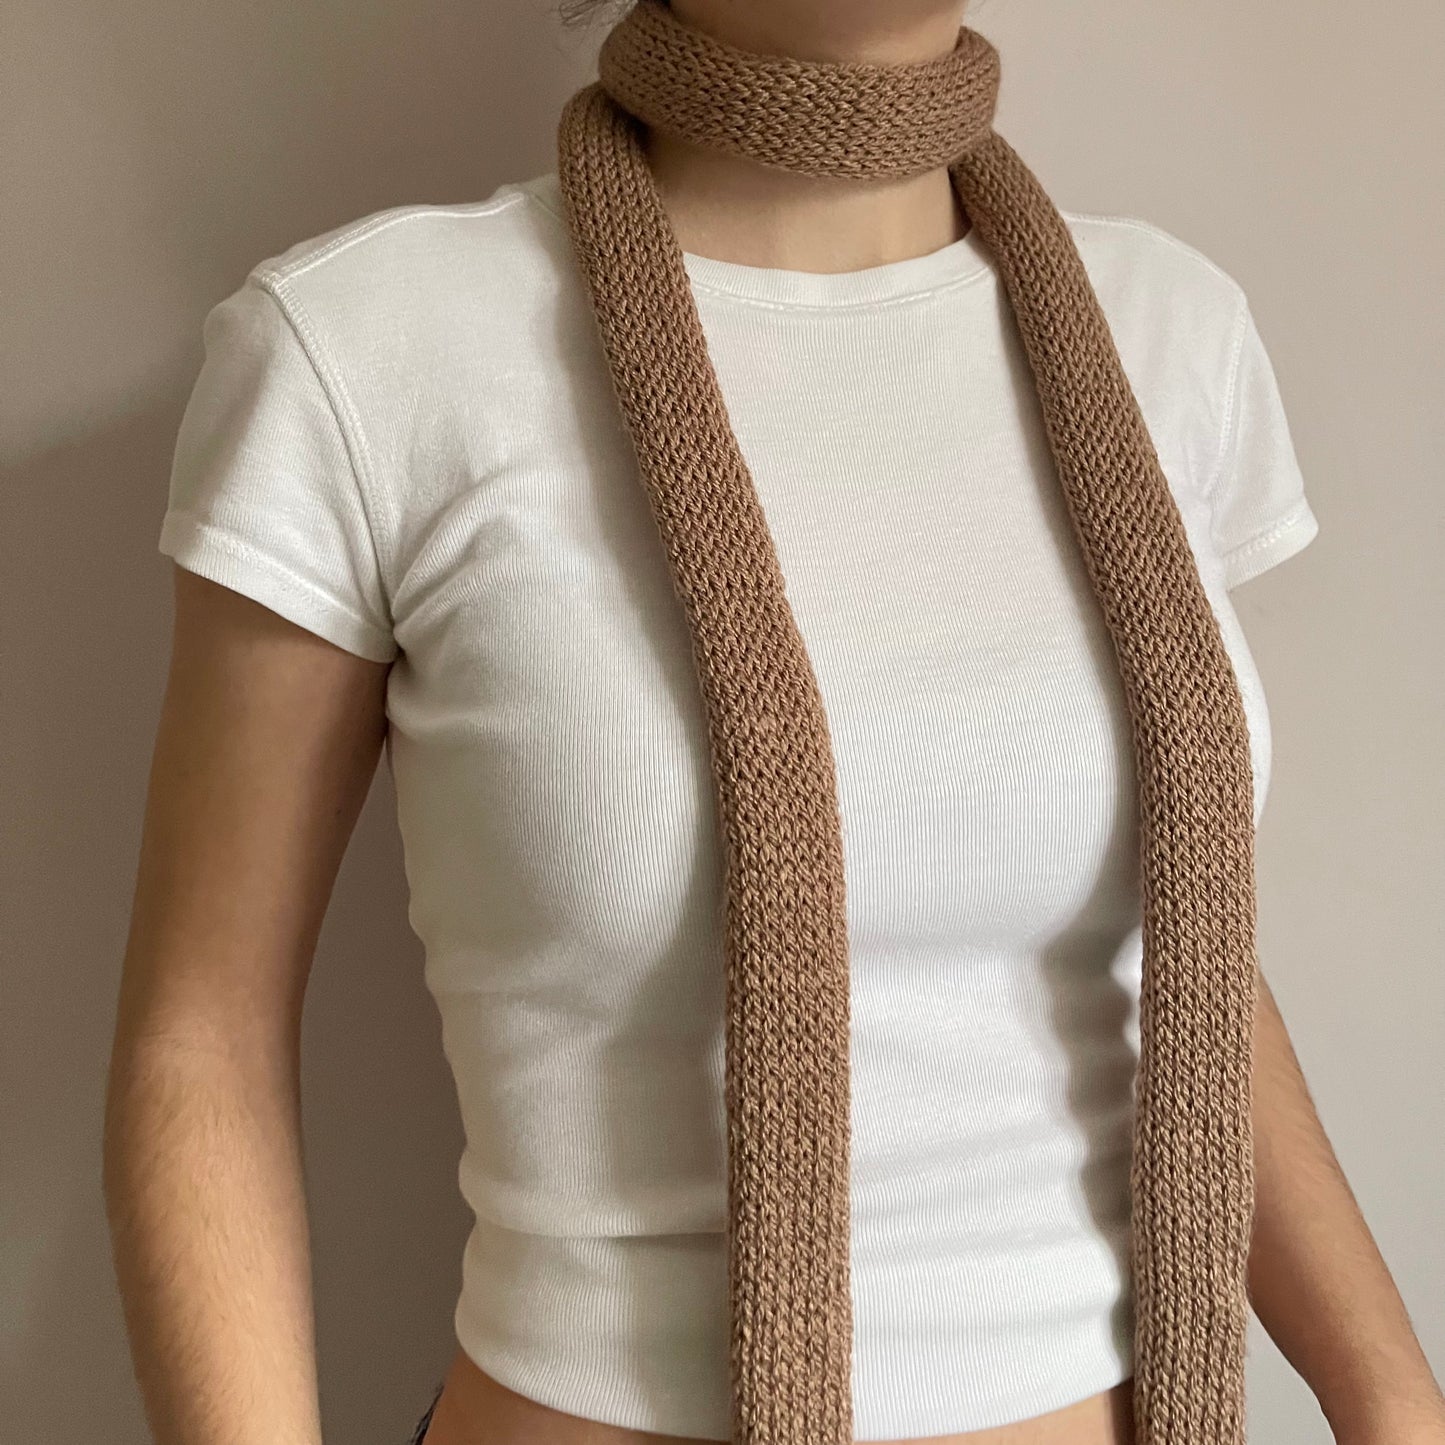 Handmade knitted skinny scarf in tan